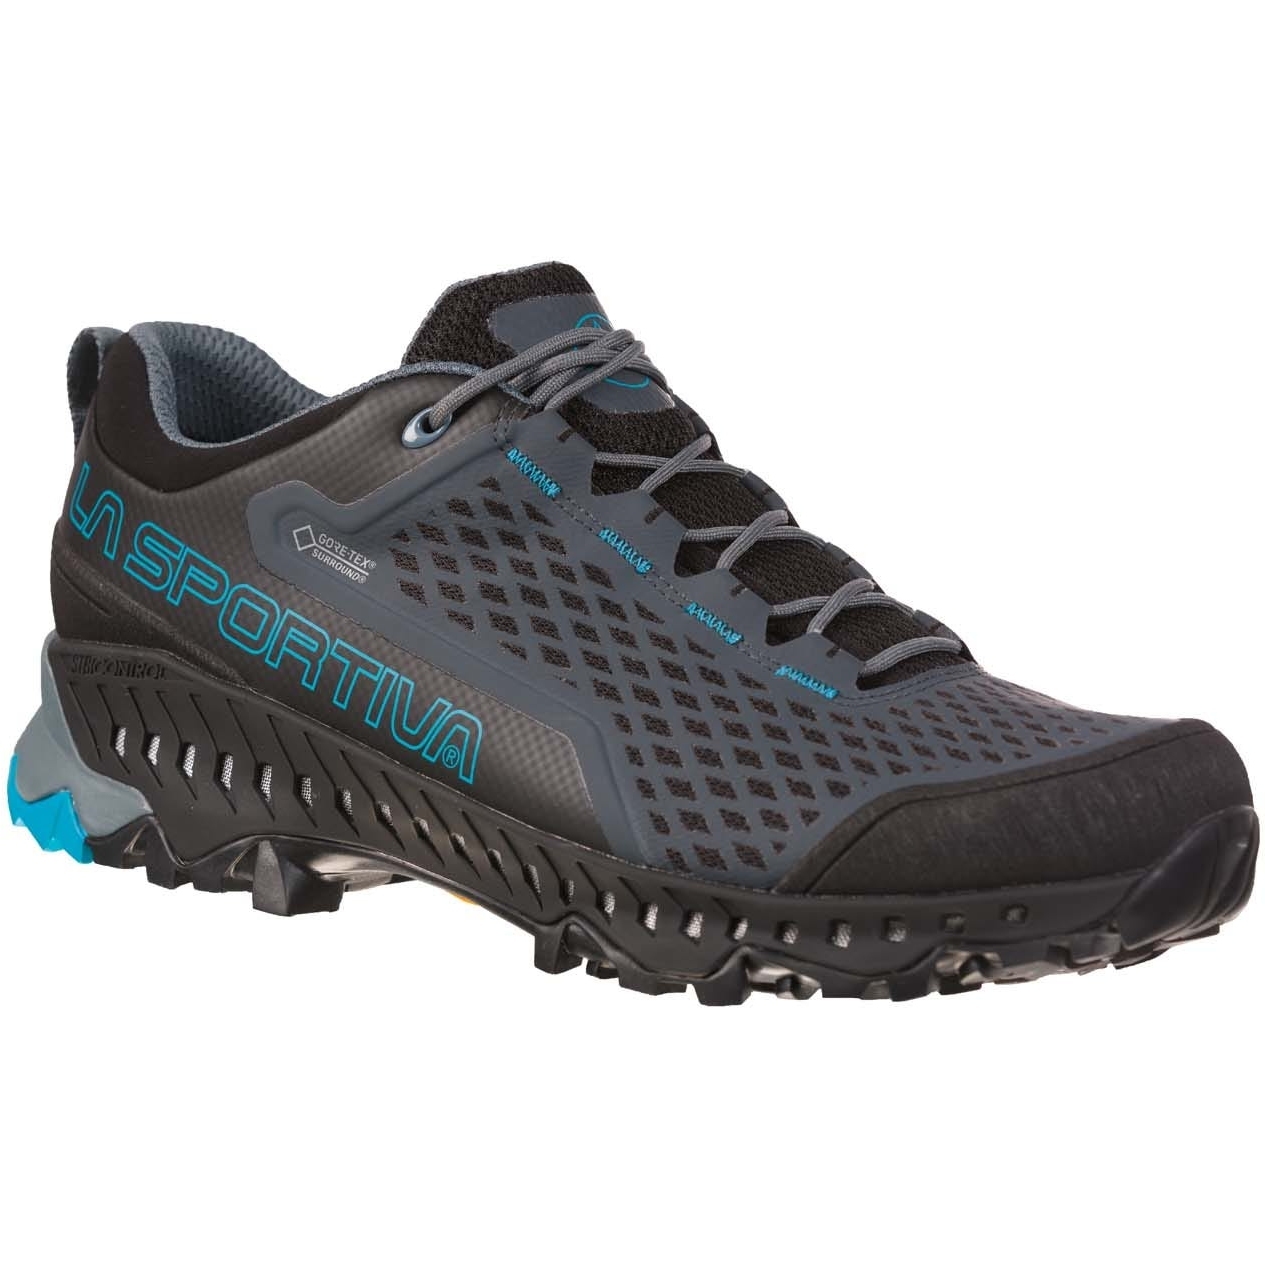 Picture of La Sportiva Spire GTX Mountain Hiking Shoes - Slate/Tropic Blue